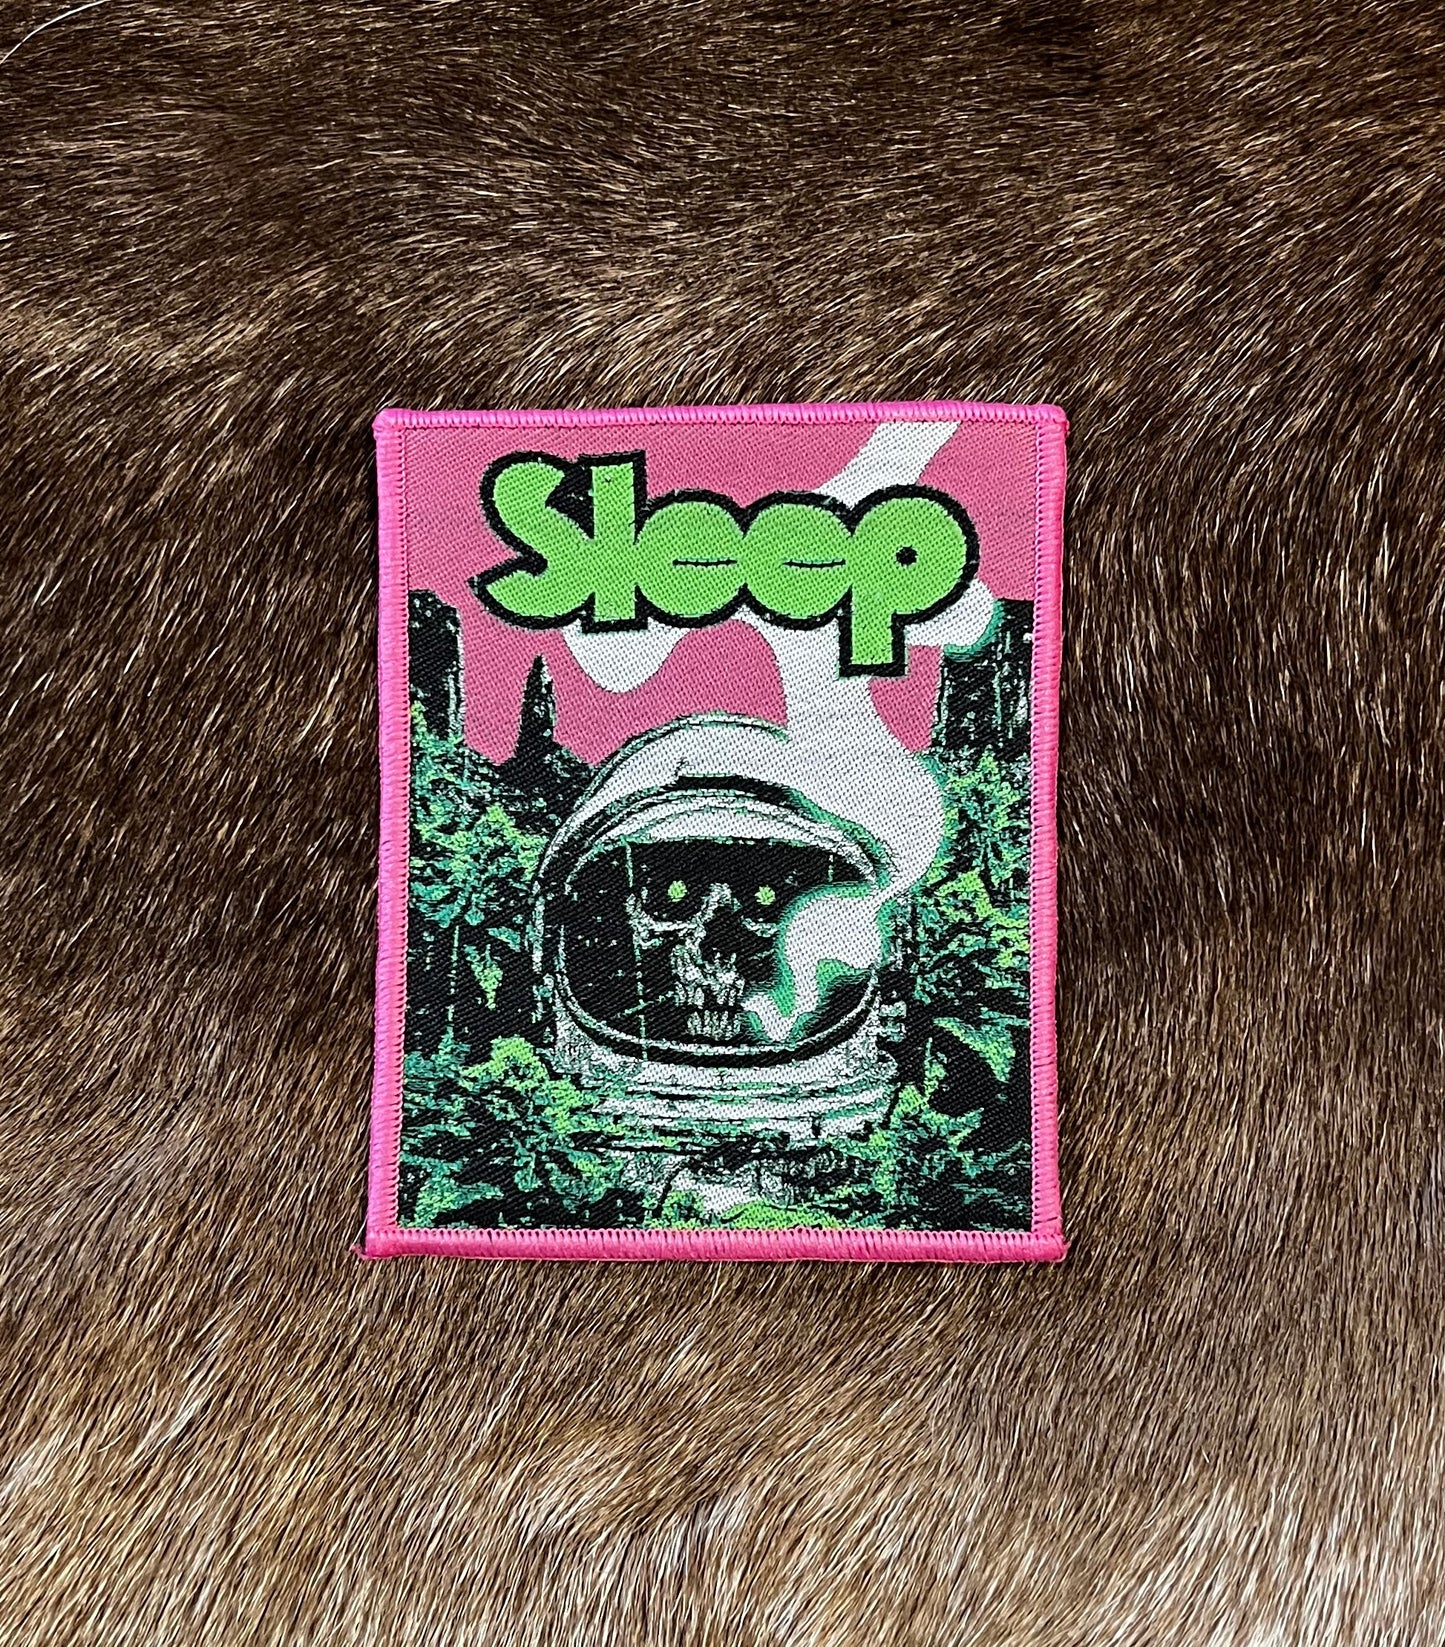 Sleep - Astronaut Patch